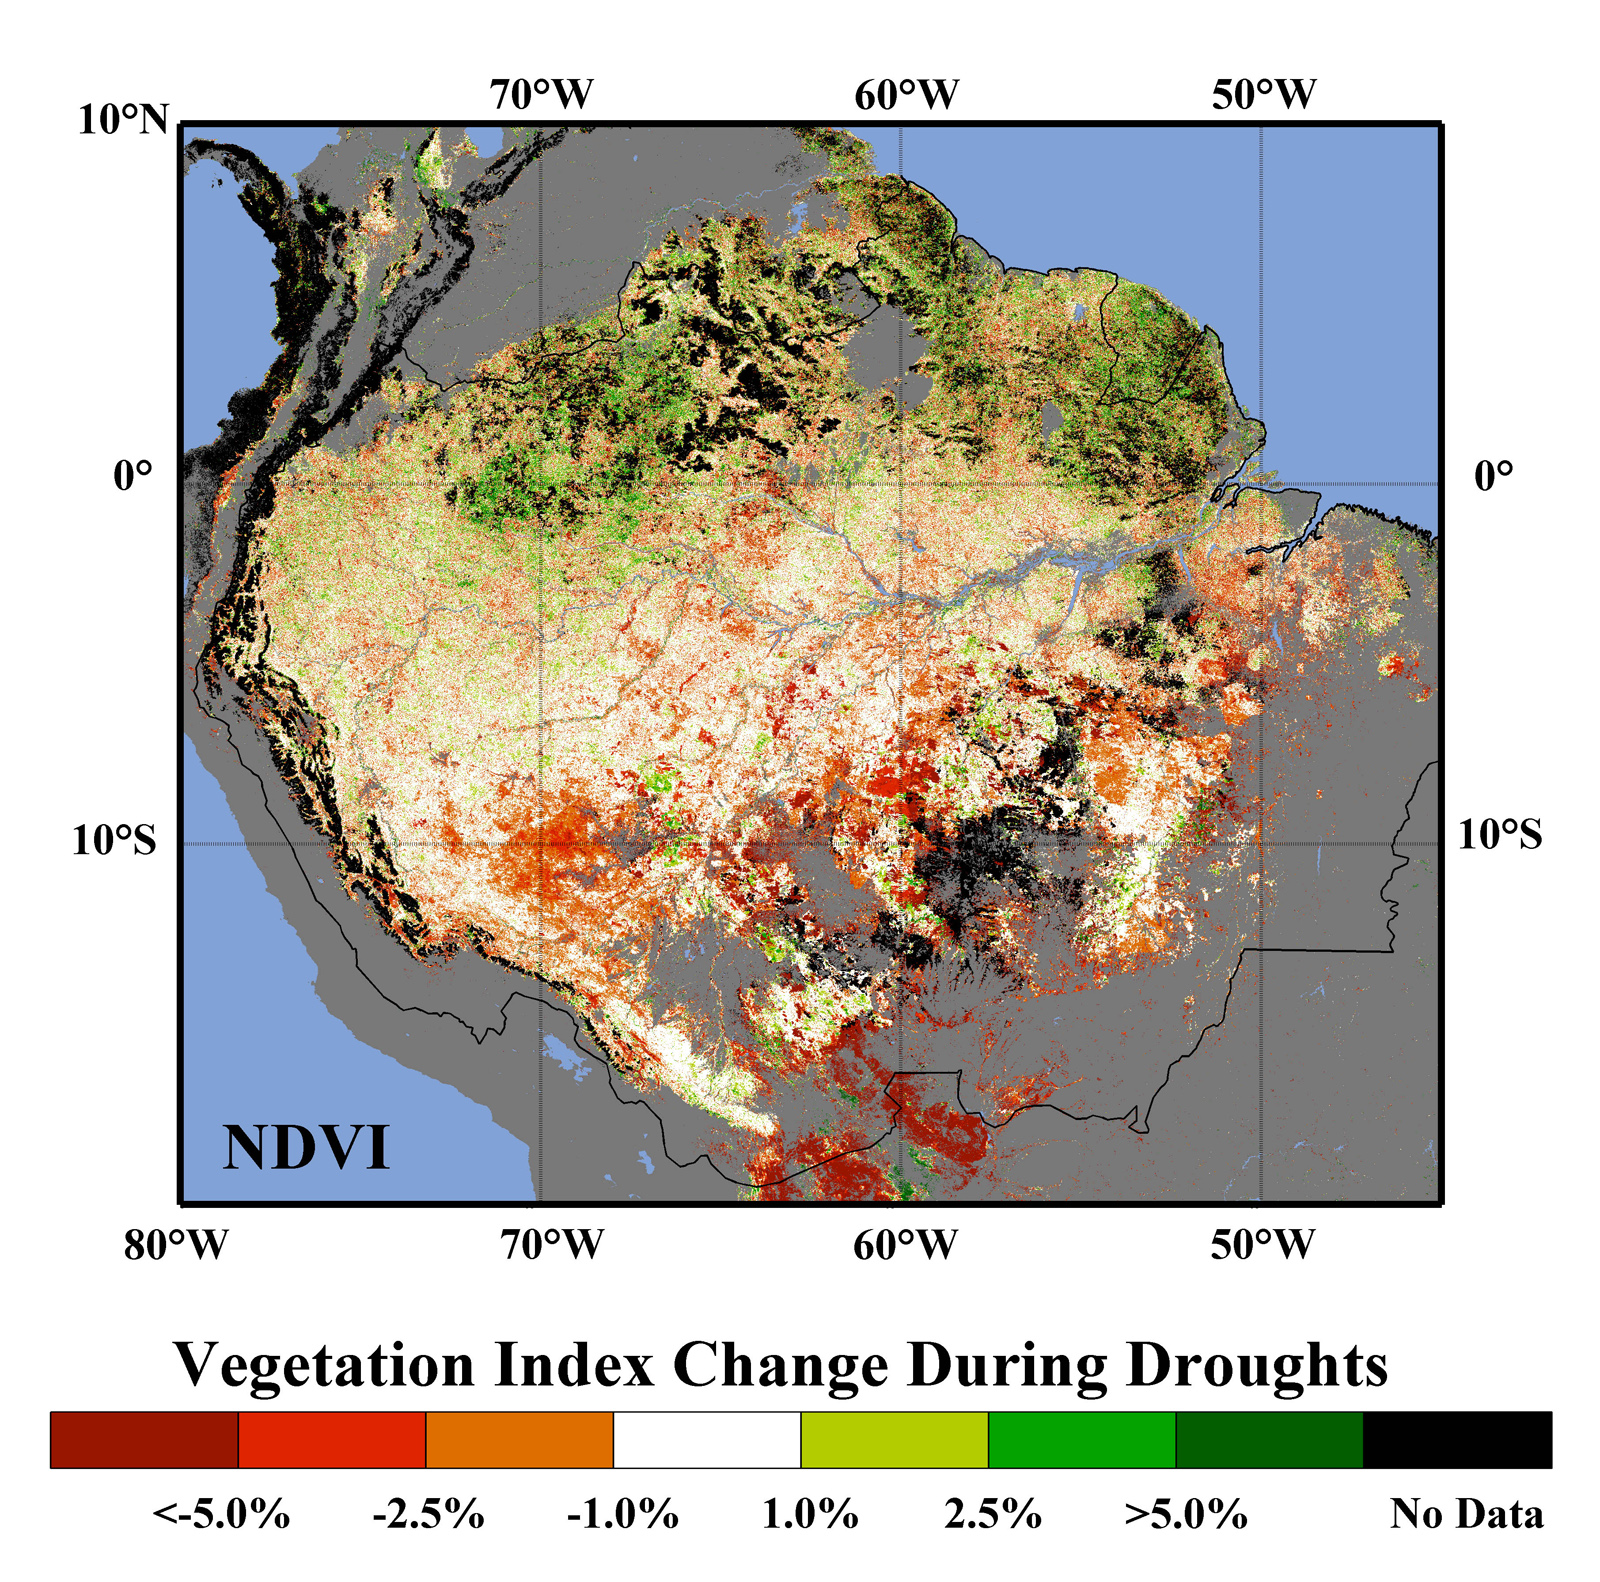 amazon deforestation case study